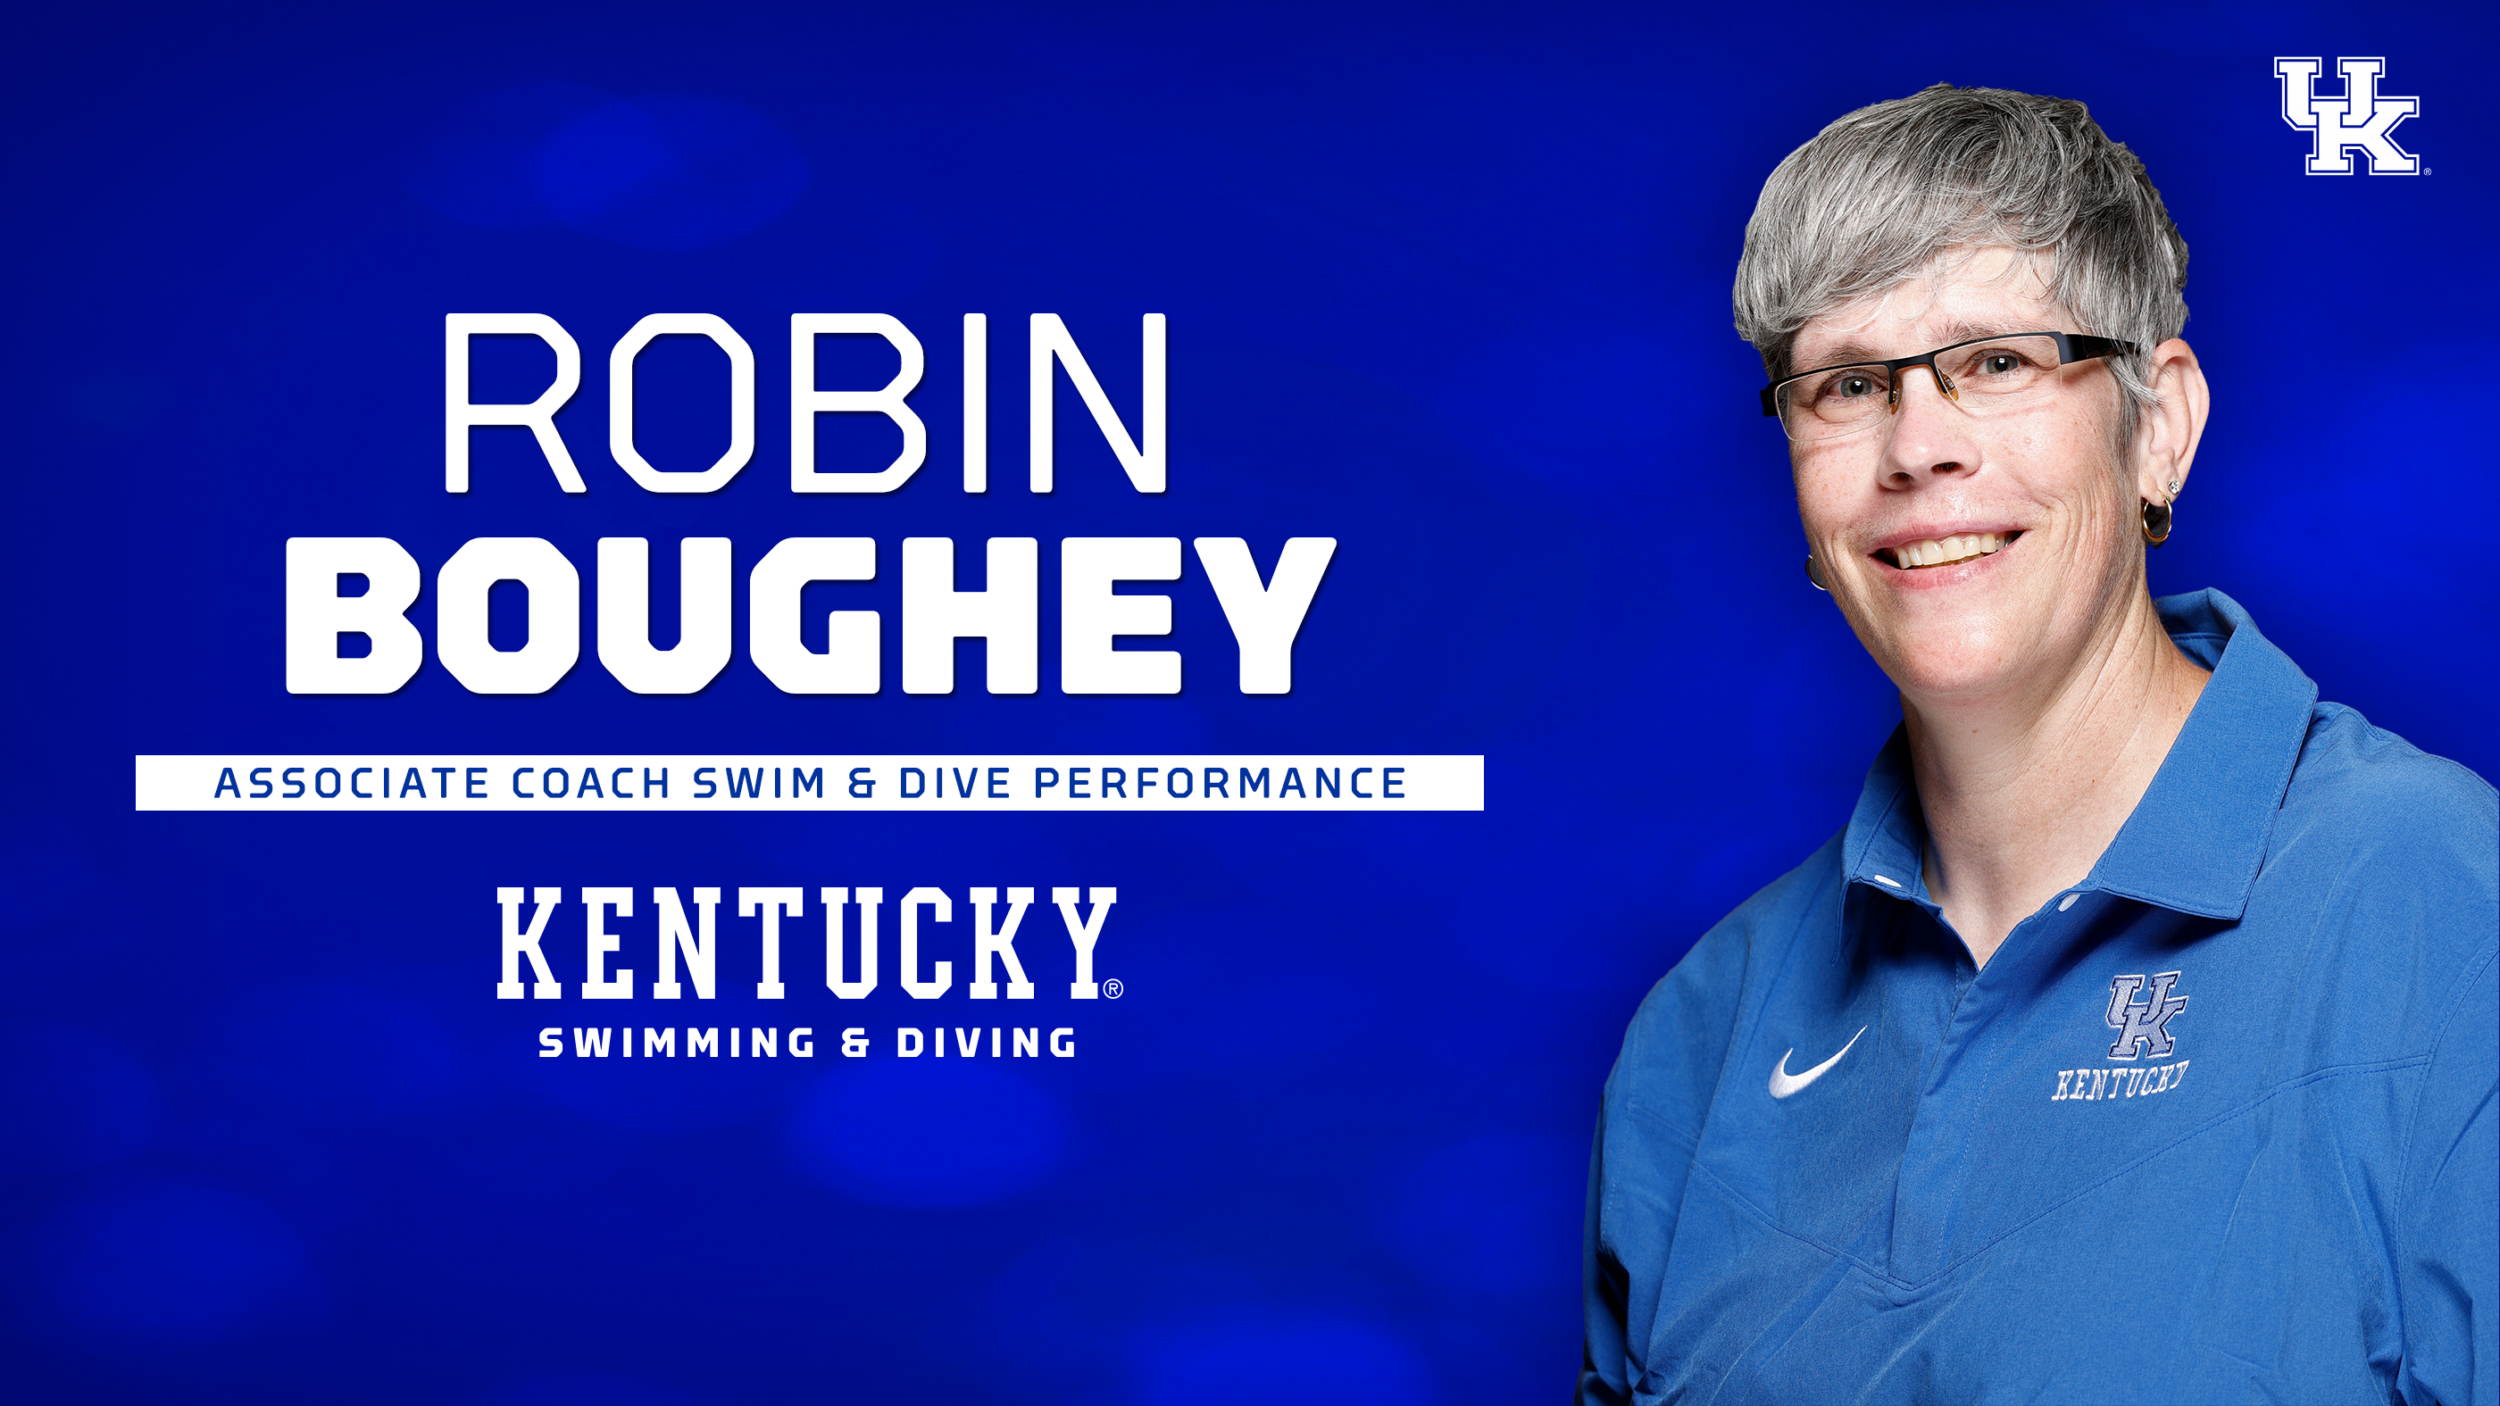 Robin Boughey Named Associate Coach of Swim & Dive Performance